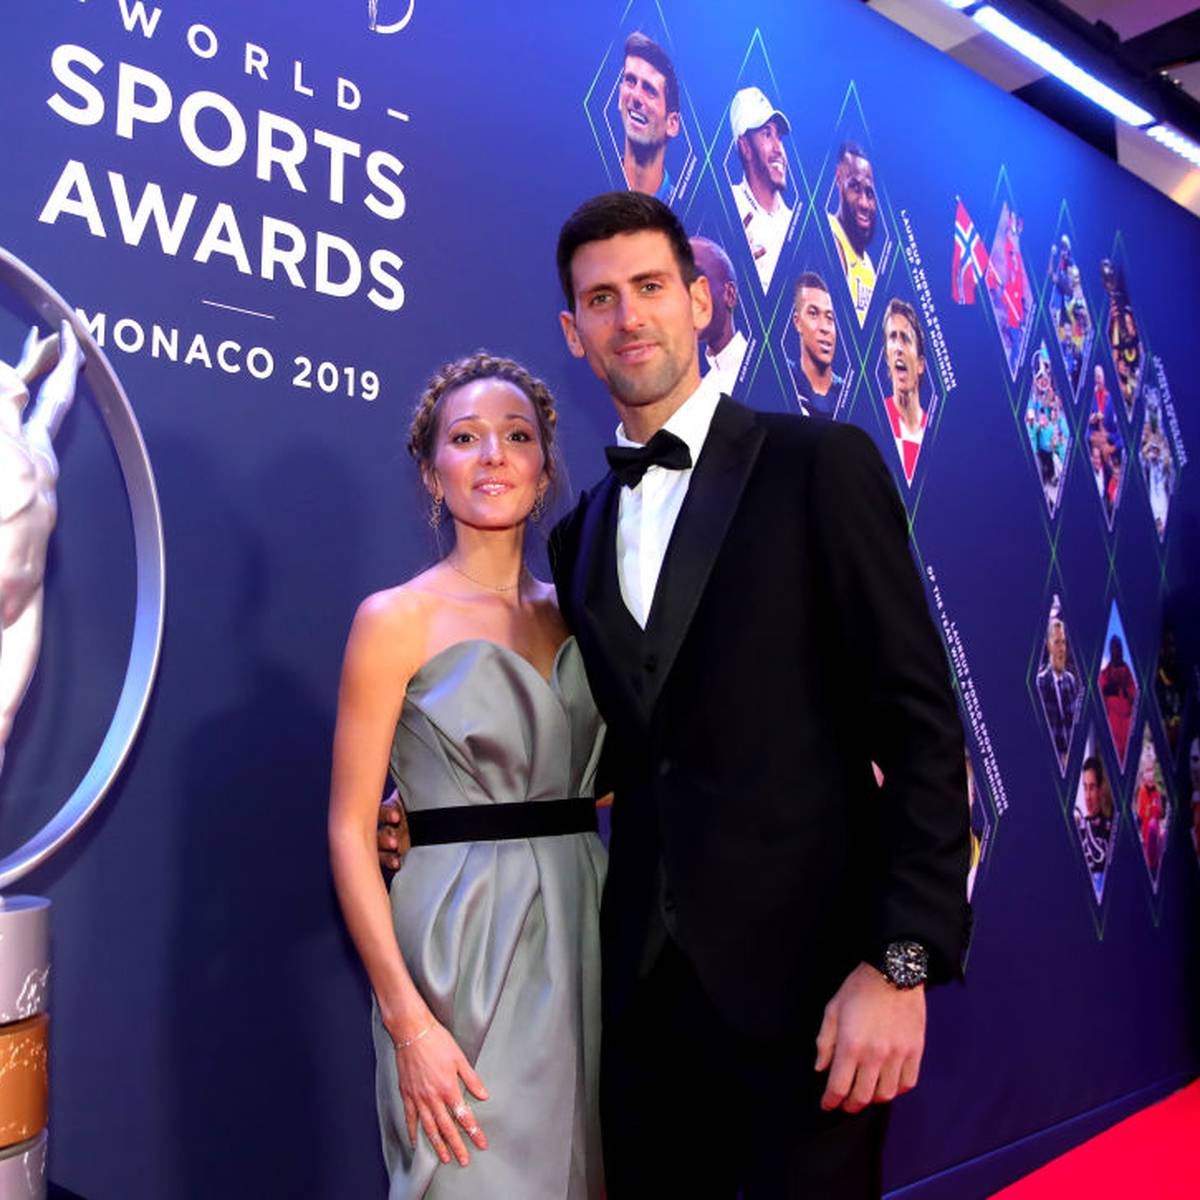 Corona Jelena Djokovic Verbreitet Fake News Auf Instagram